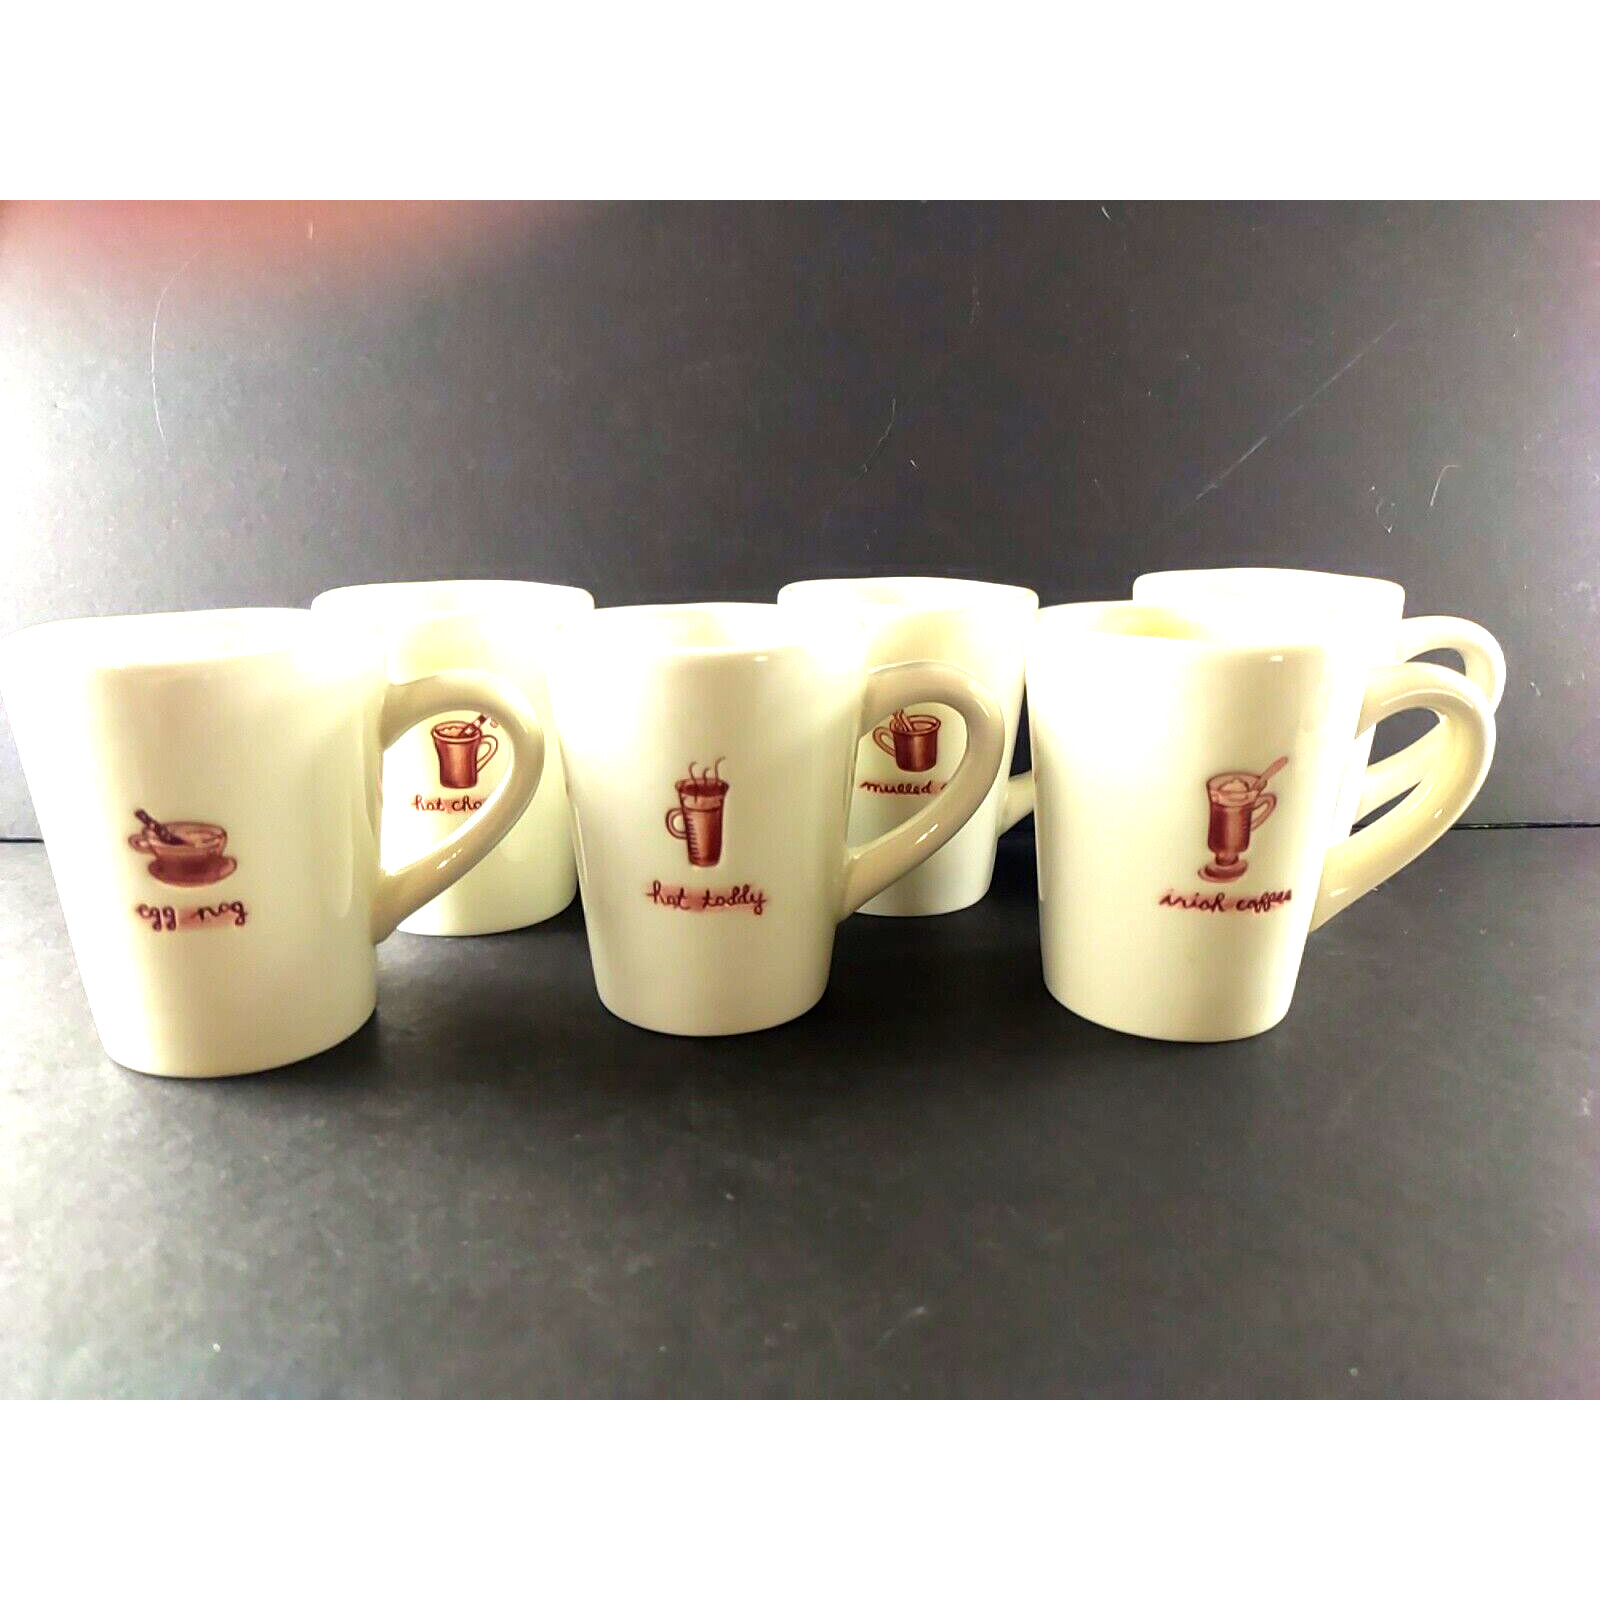 William Sonoma Ceramic Mugs Cups Seasonal Collection Set Of 6 Christmas Holiday